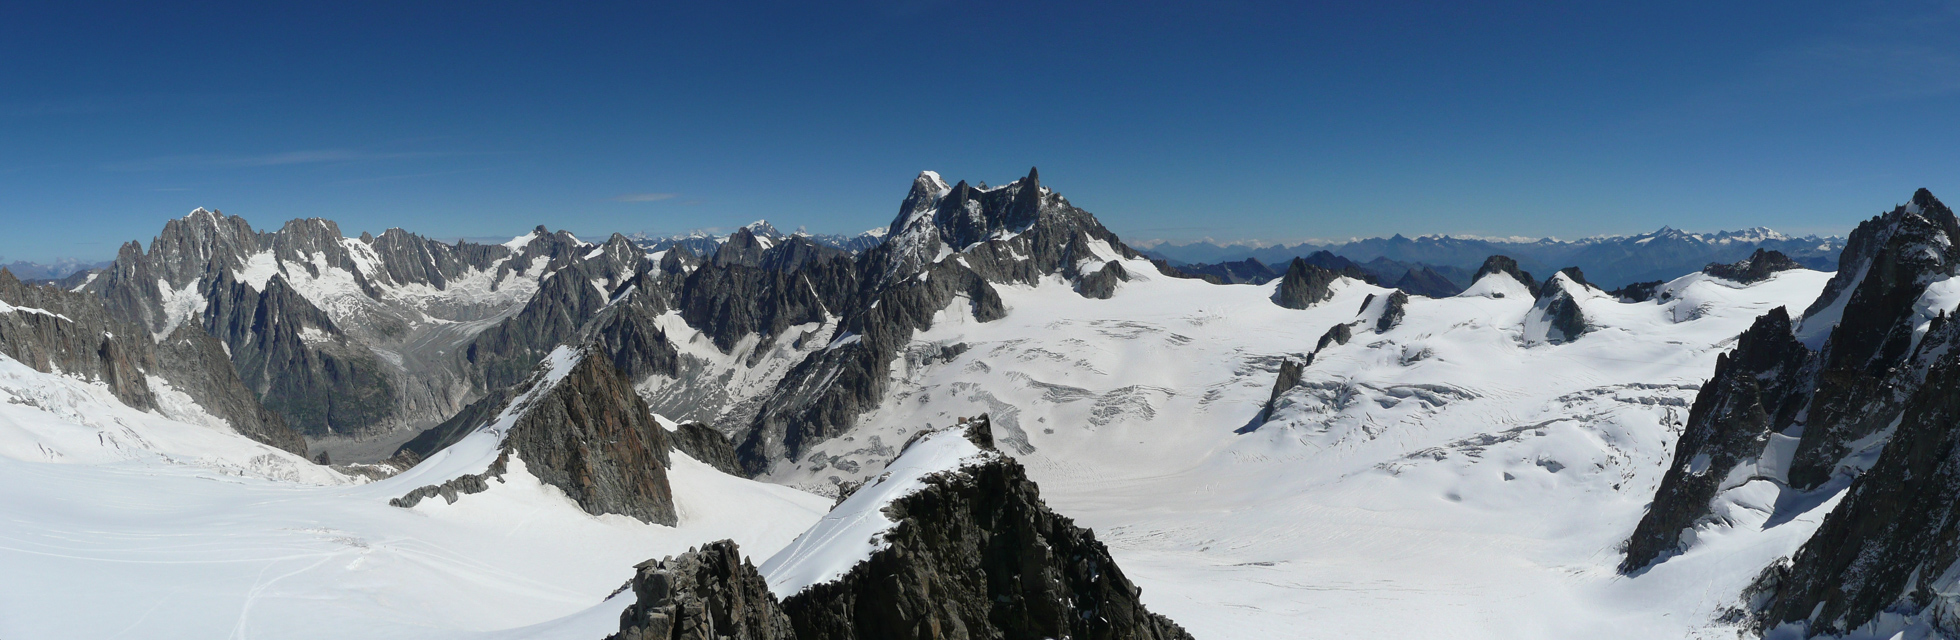 alpine climbing traverse of pointe lachenal